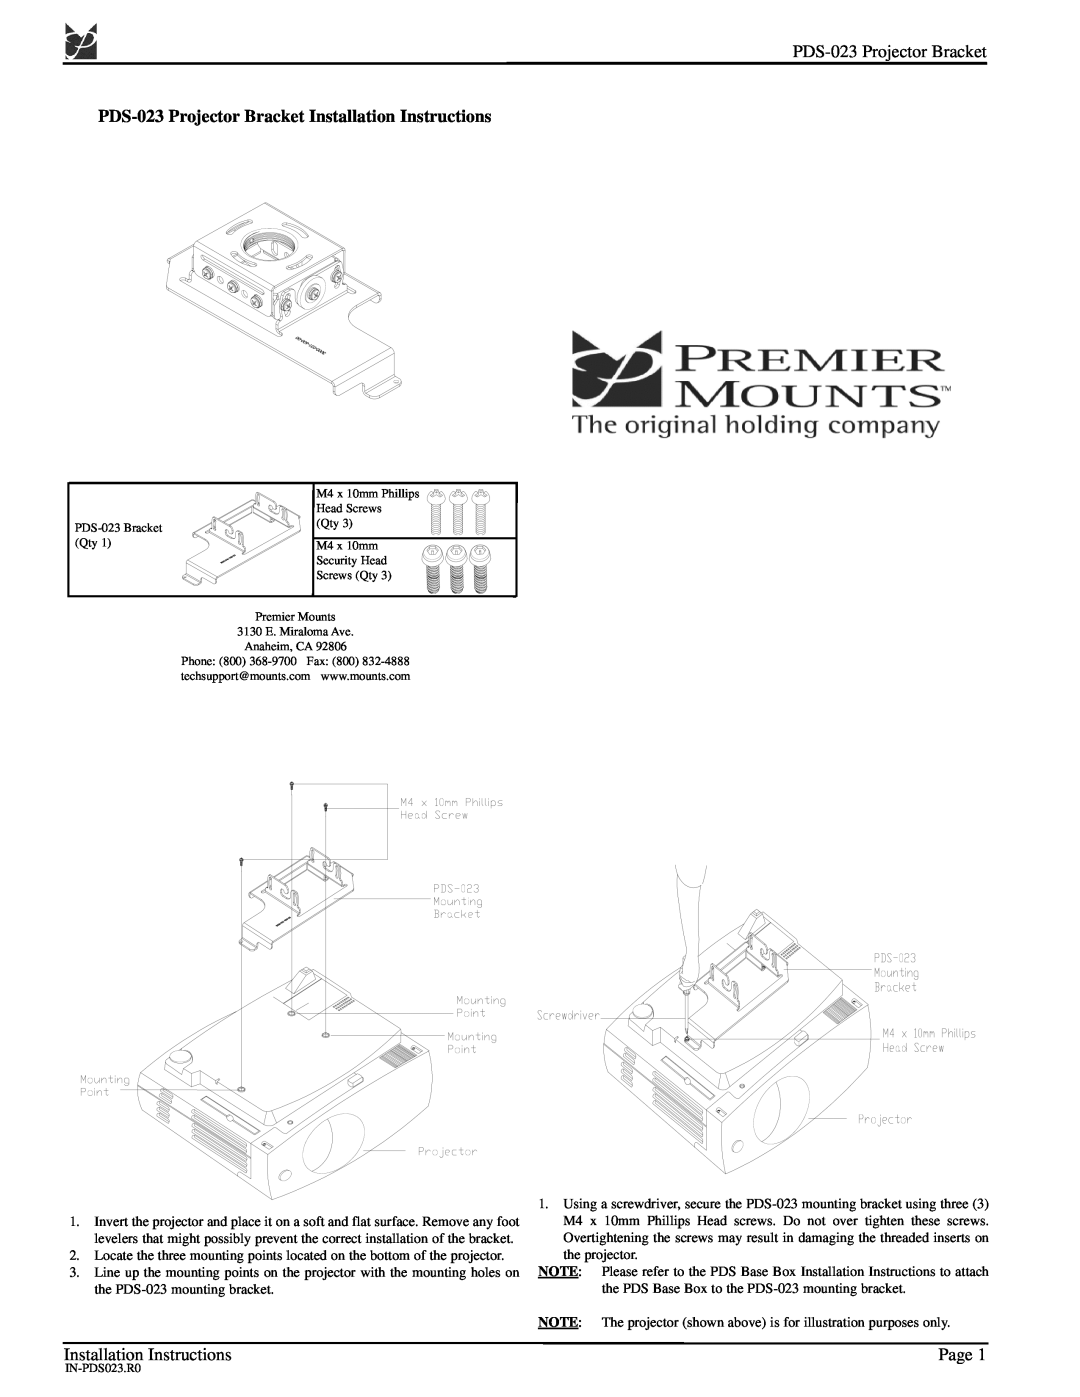 Premier Mounts installation instructions PDS-023 Projector Bracket Installation Instructions, Page 